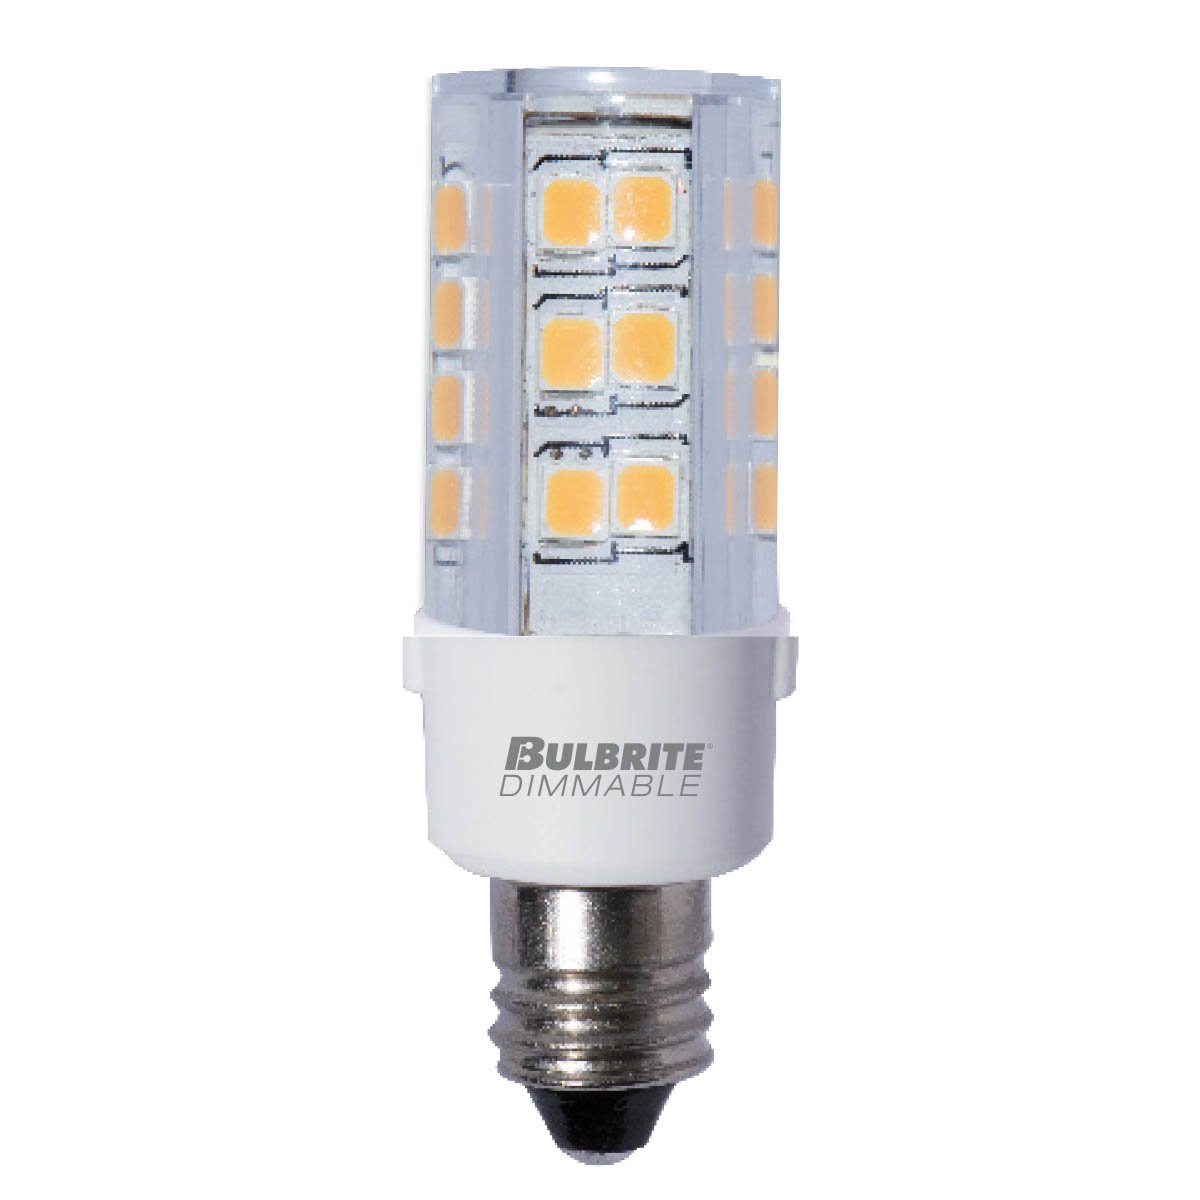 BULBRITE LED T4 CANDELABRA SCREW (E12) 4.5W DIMMABLE LIGHT BULB 2700K/WARM WHITE 35W INCANDESCENT EQUIVALENT 2PK (770595)